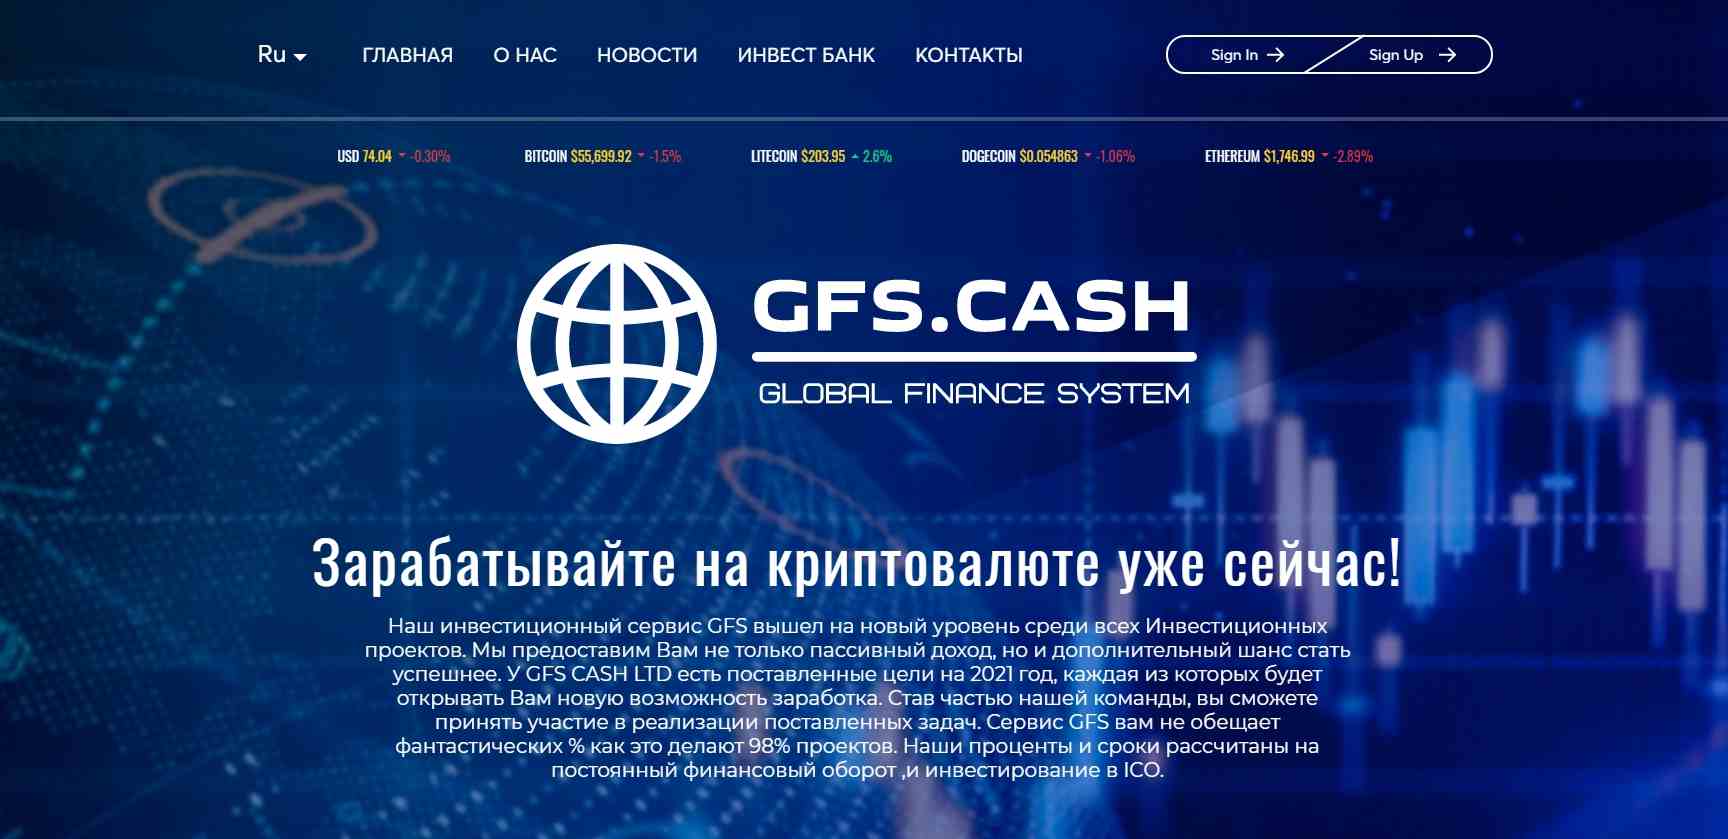 Global Finance System